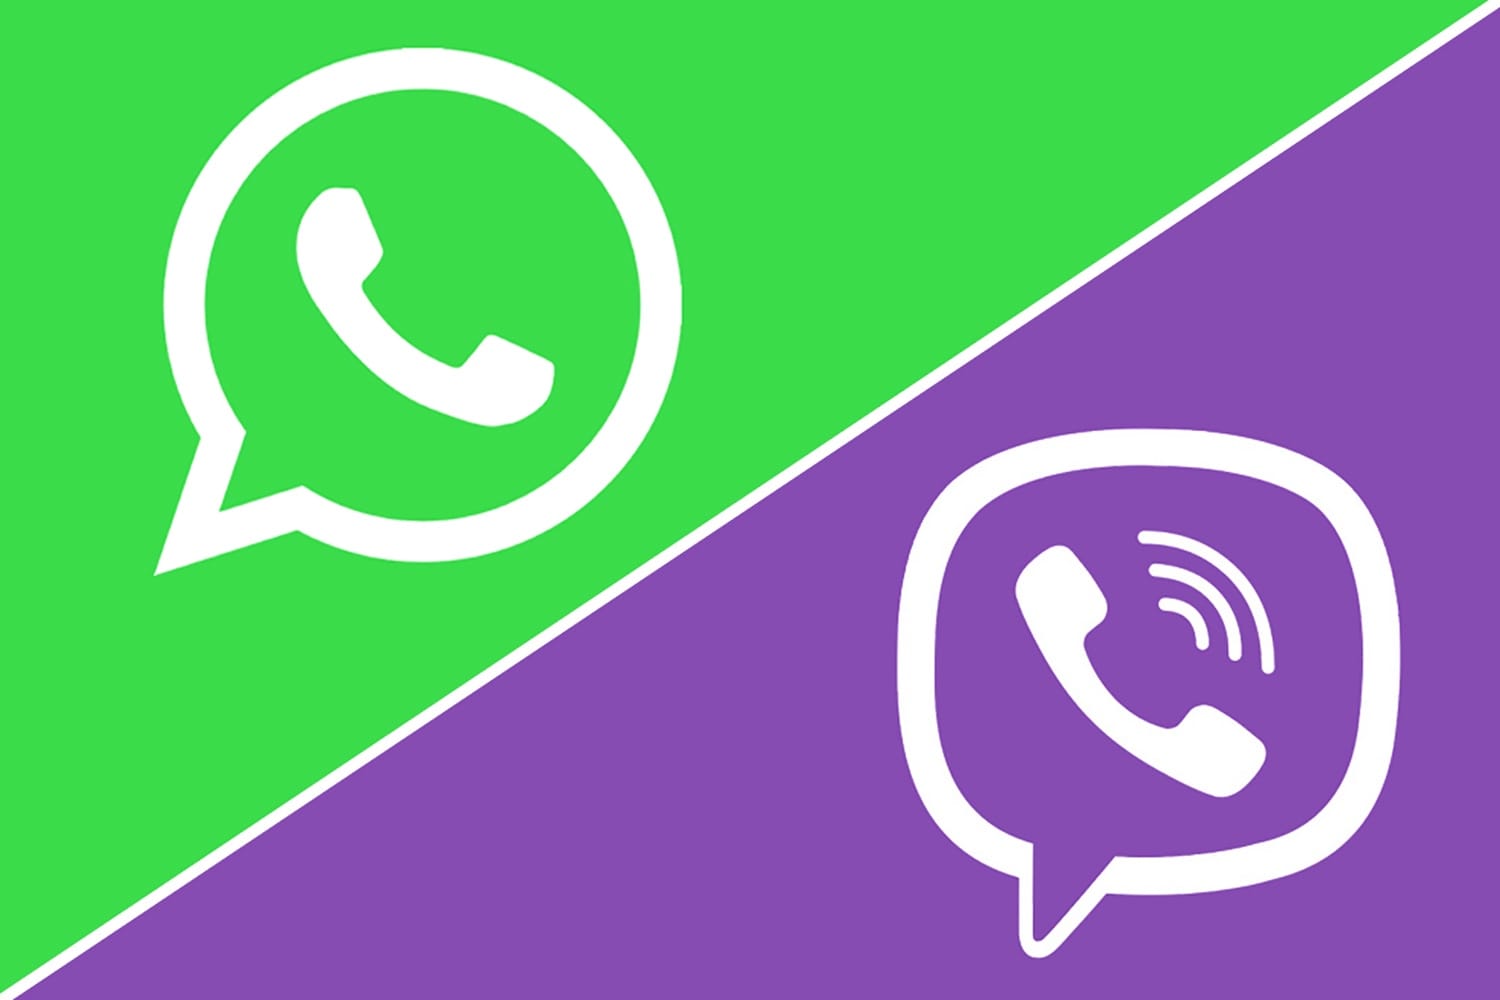 WhatsApp For Mac Vs WhatsApp Web: Which Is Best?